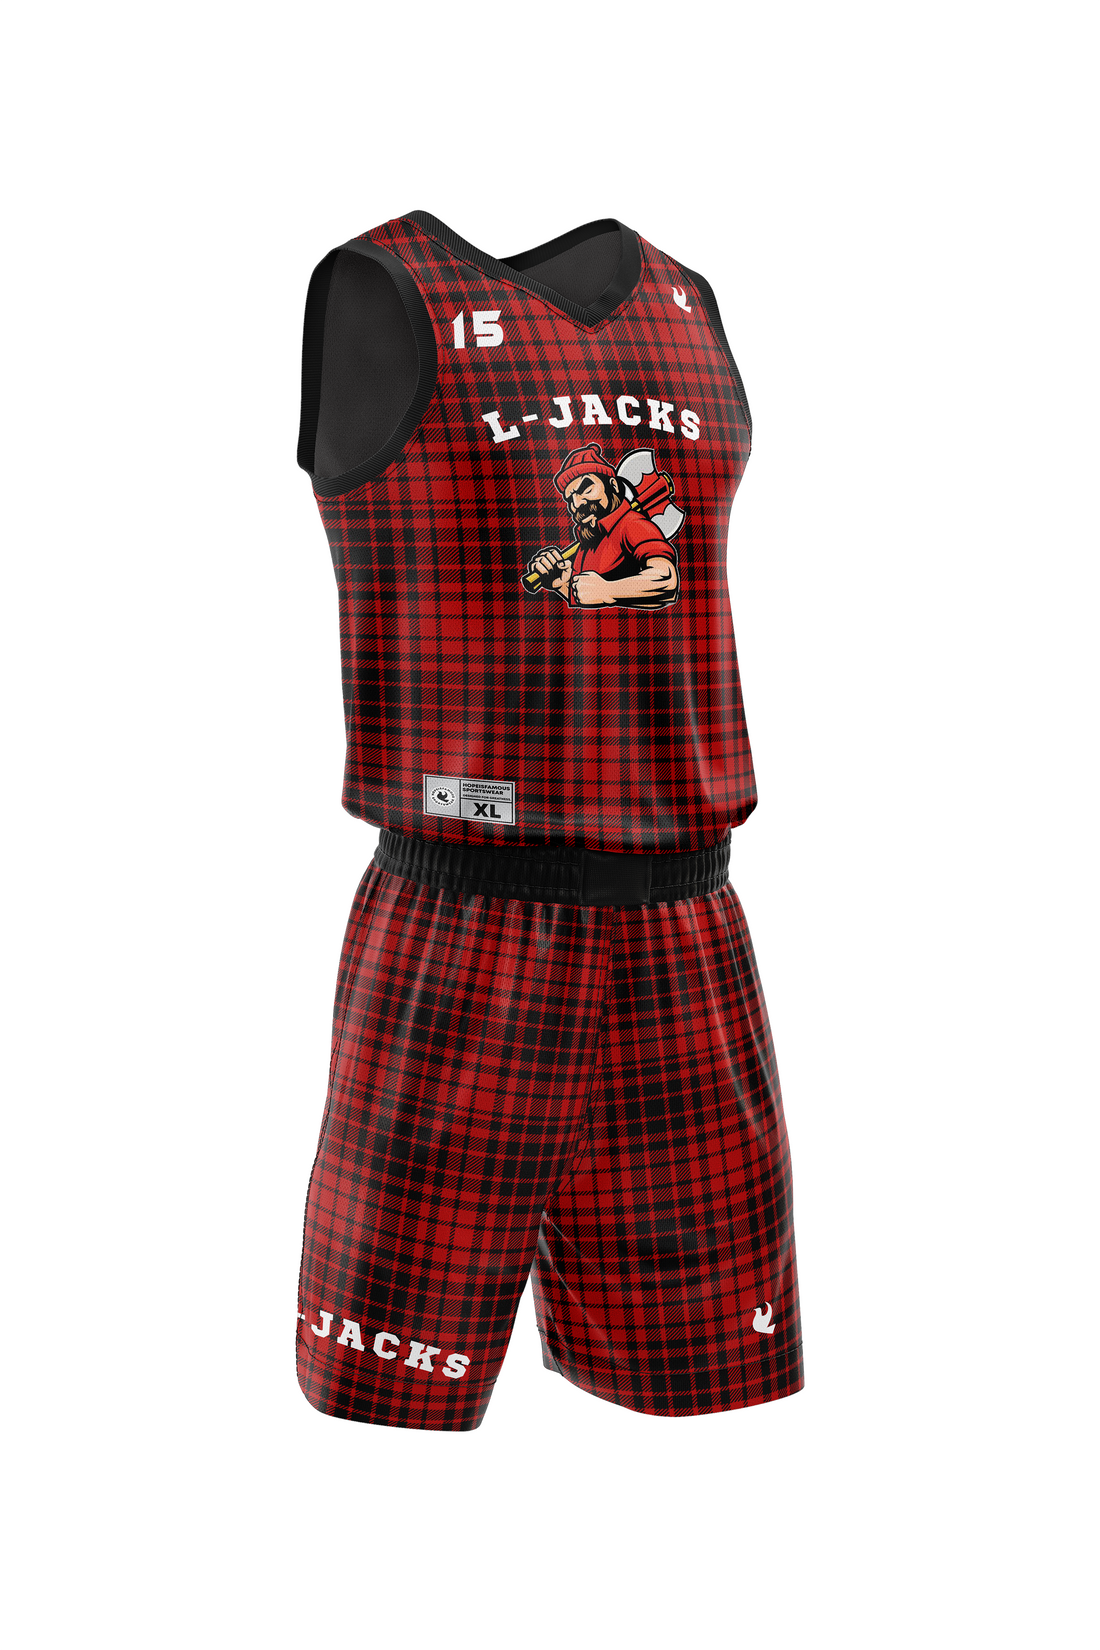 M-Power Basketball Uniform: L-Jacks